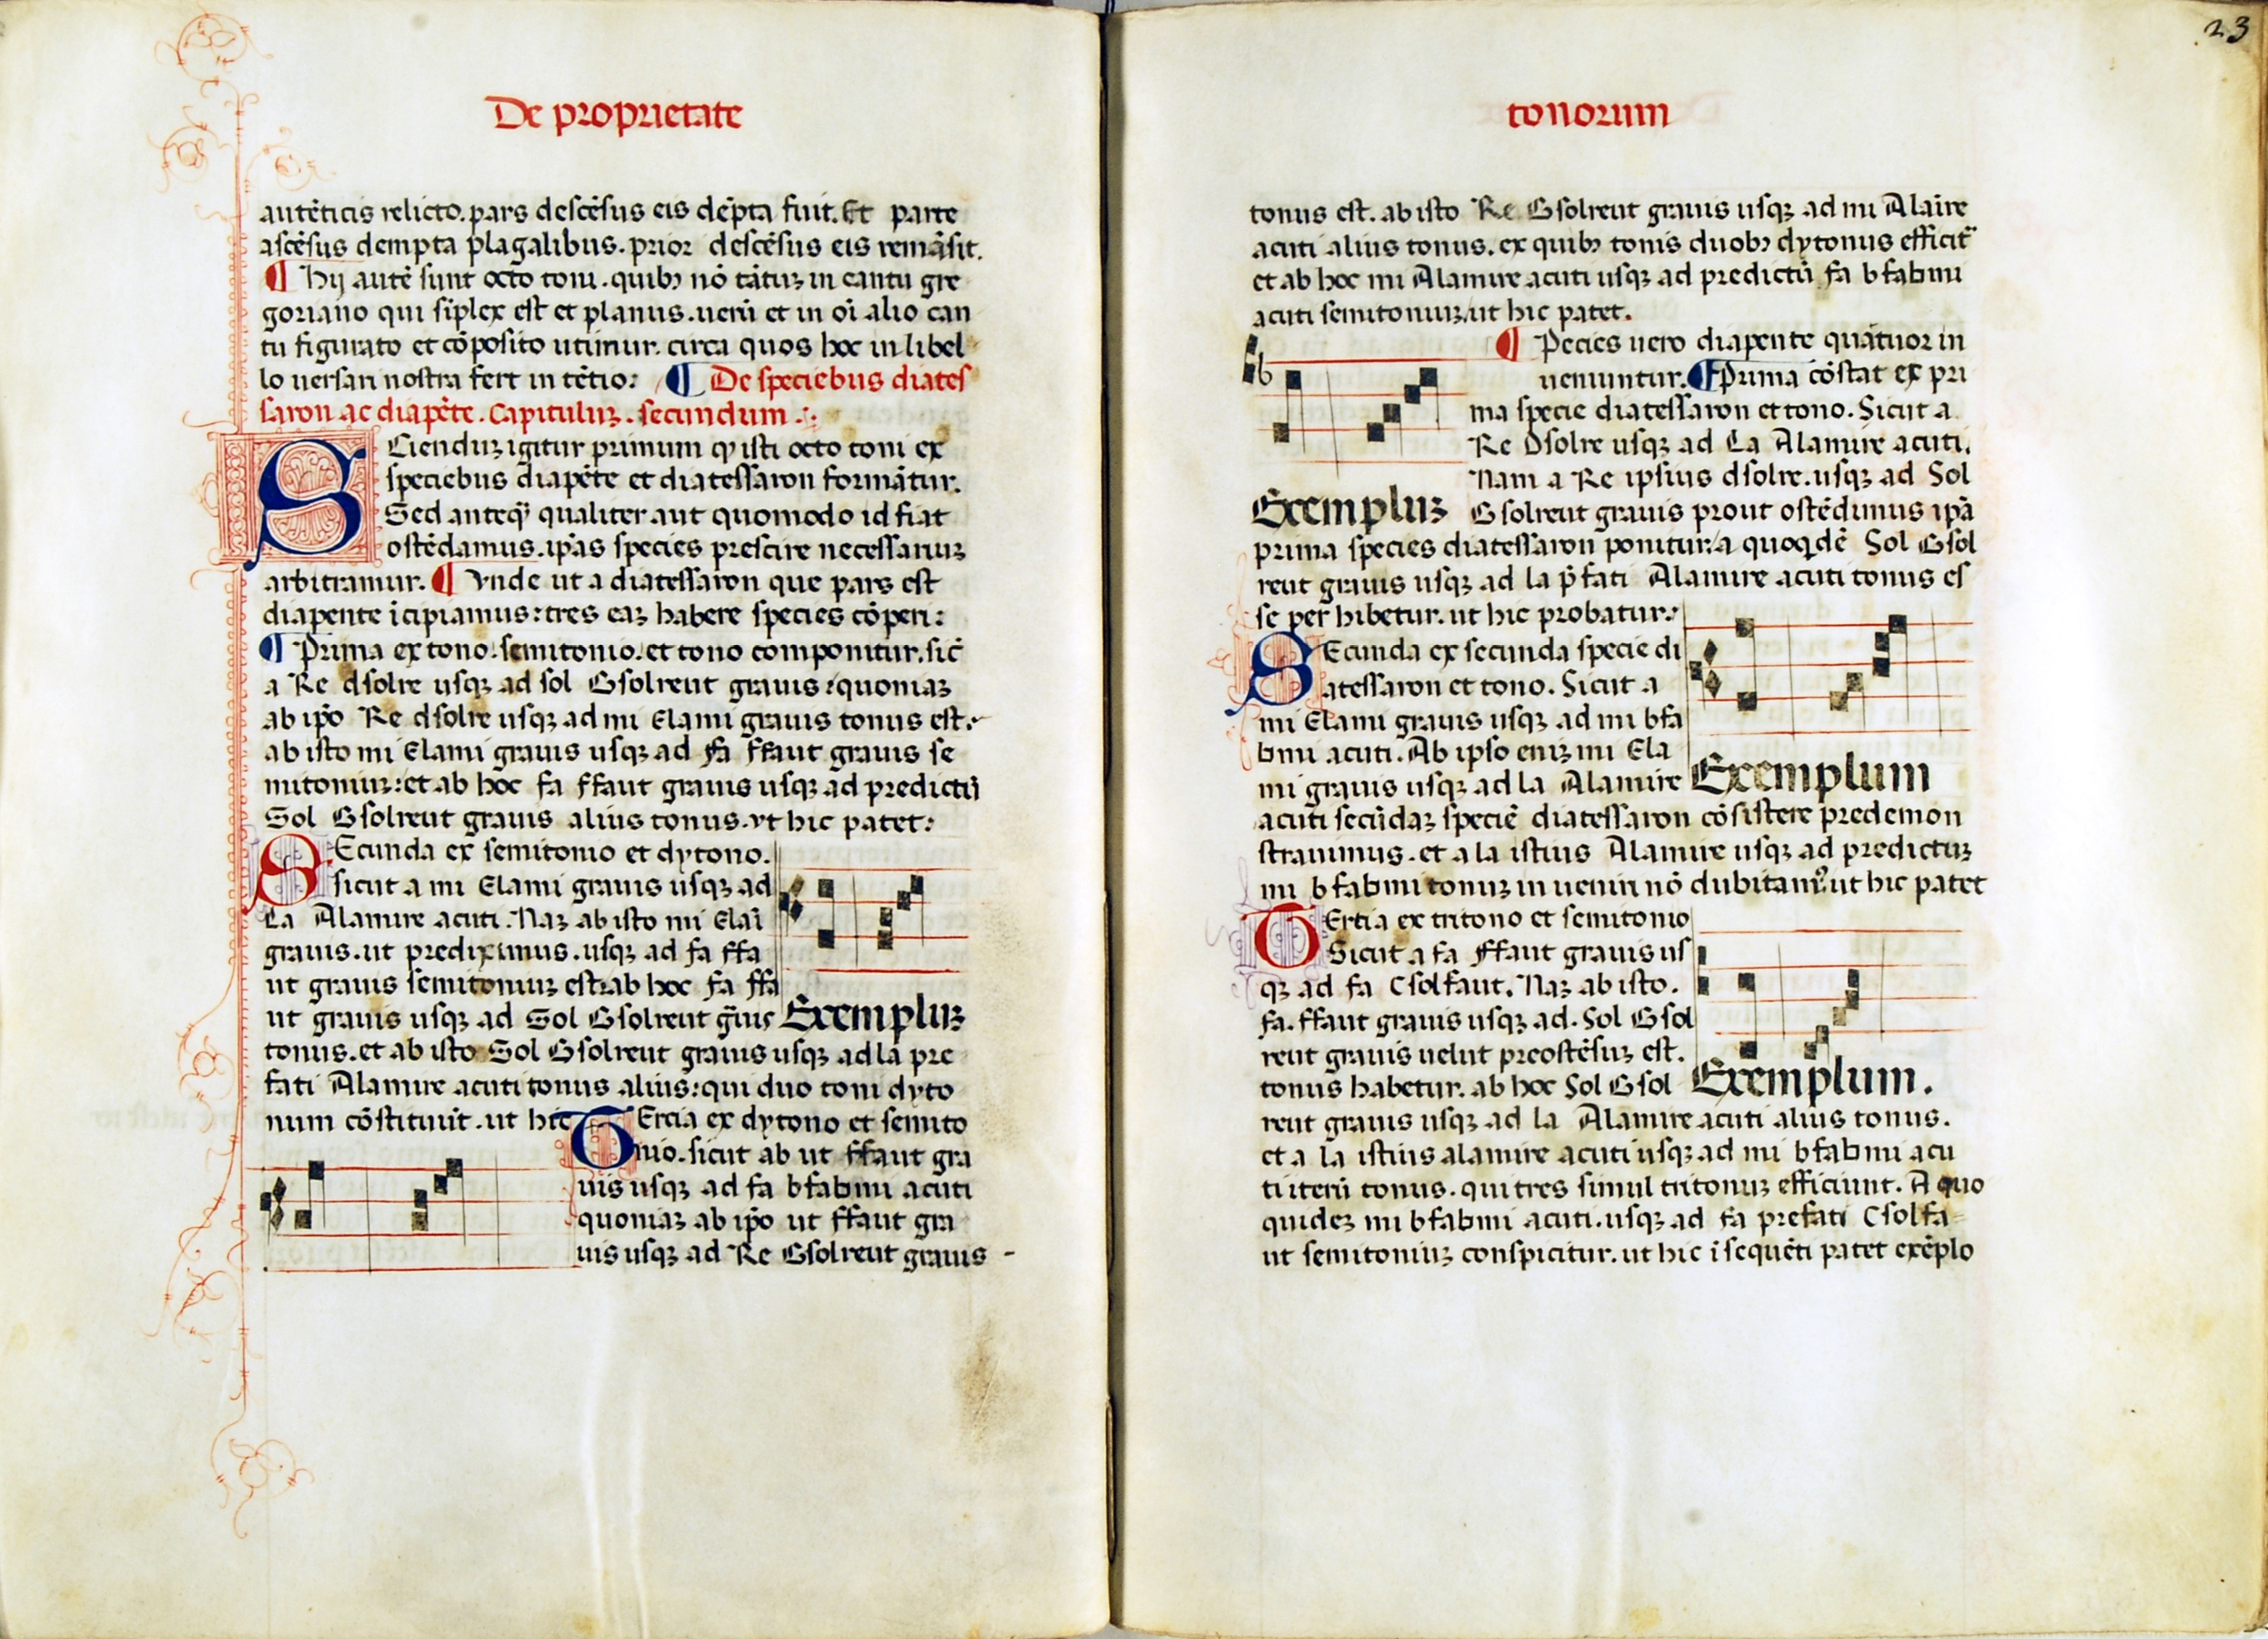 Bologna, Biblioteca Universitaria, MS 2573, fols. 22v–23r. Source: Biblioteca Universitaria, Bologna.